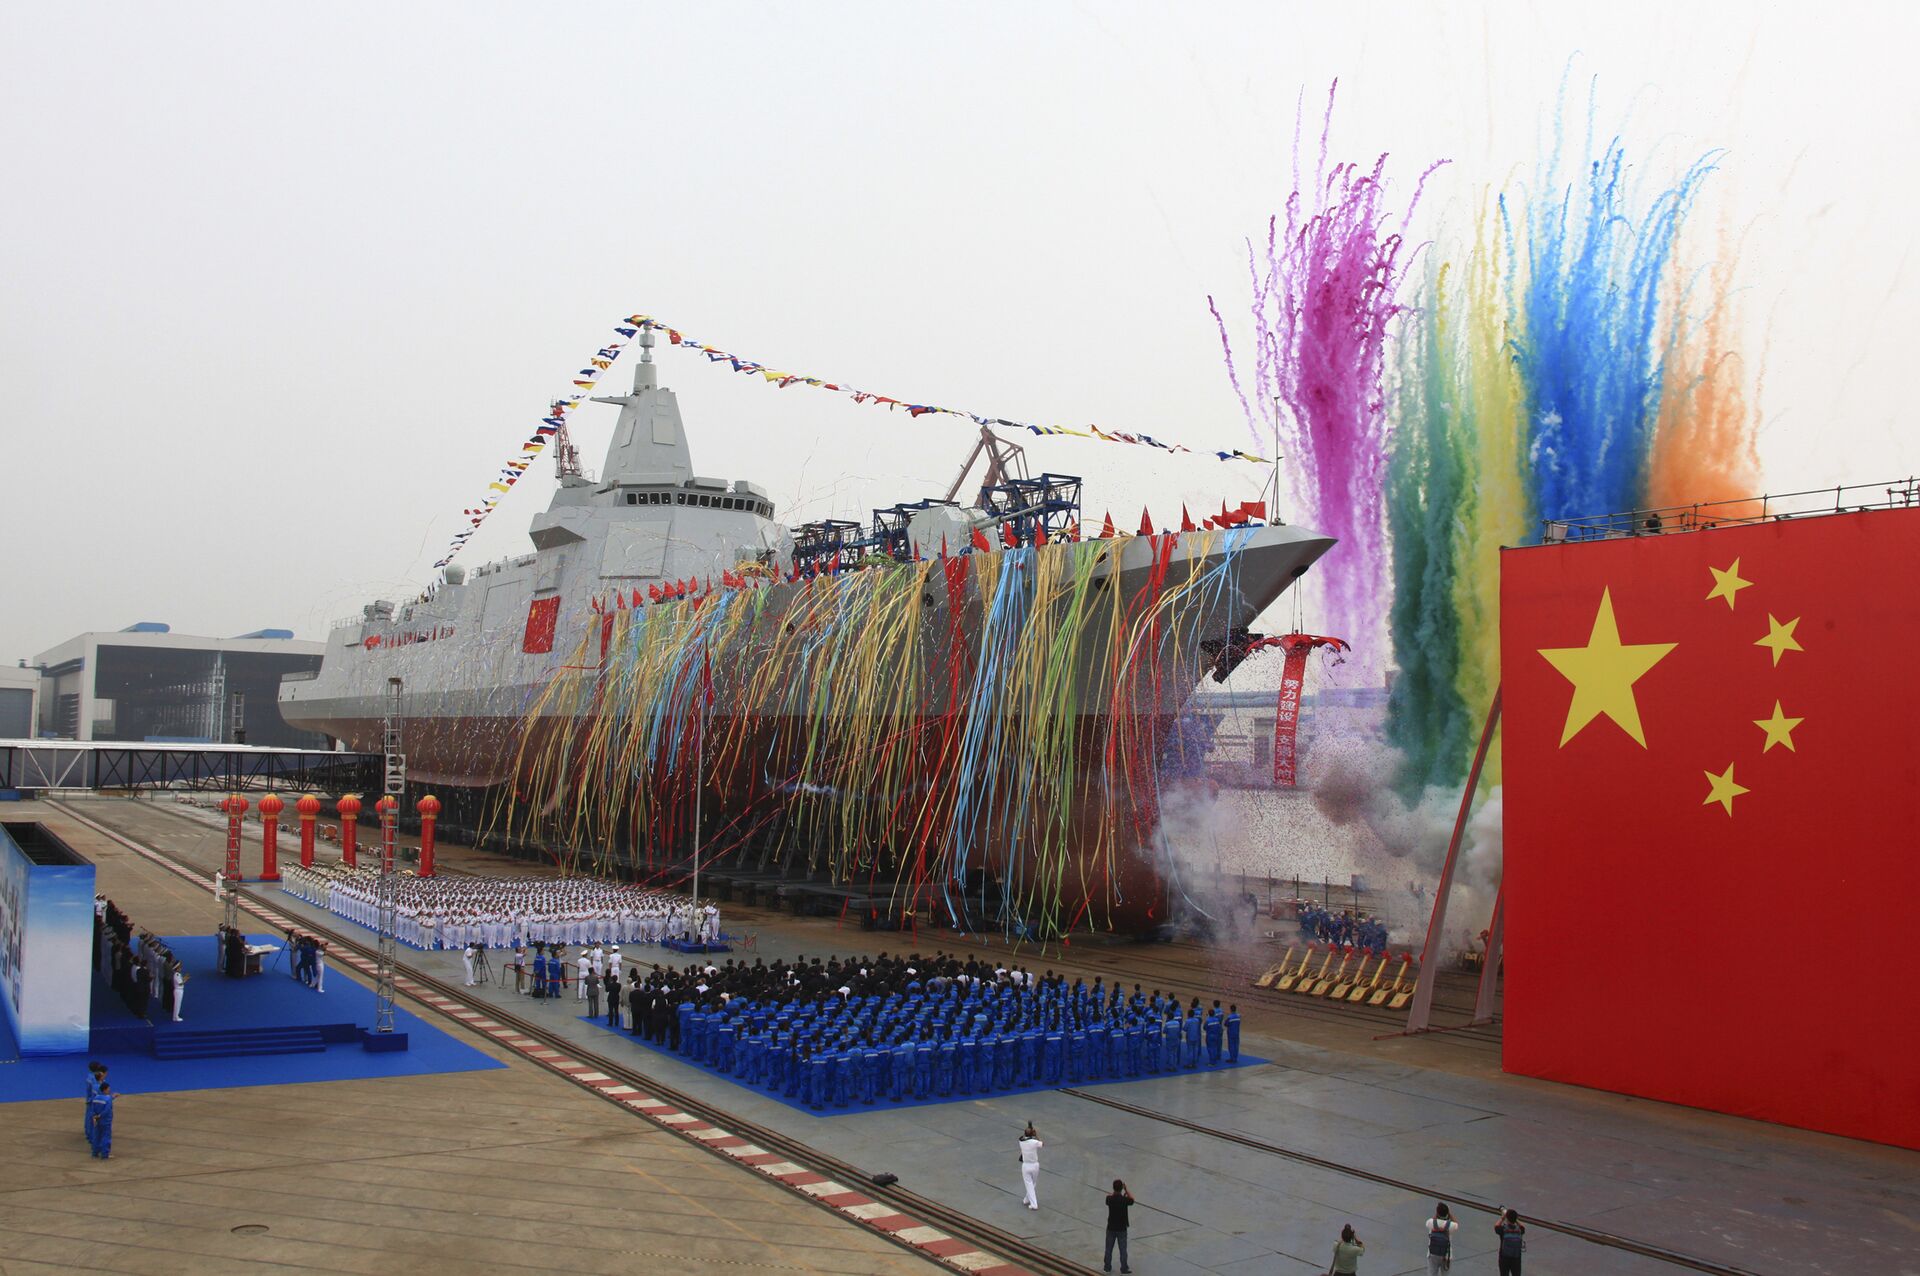 China Rolls Out One More Stealth Destroyer That ‘Dwarfs’ US’ Zumwalt-Class Ship, Report Says - Sputnik International, 1920, 09.04.2021